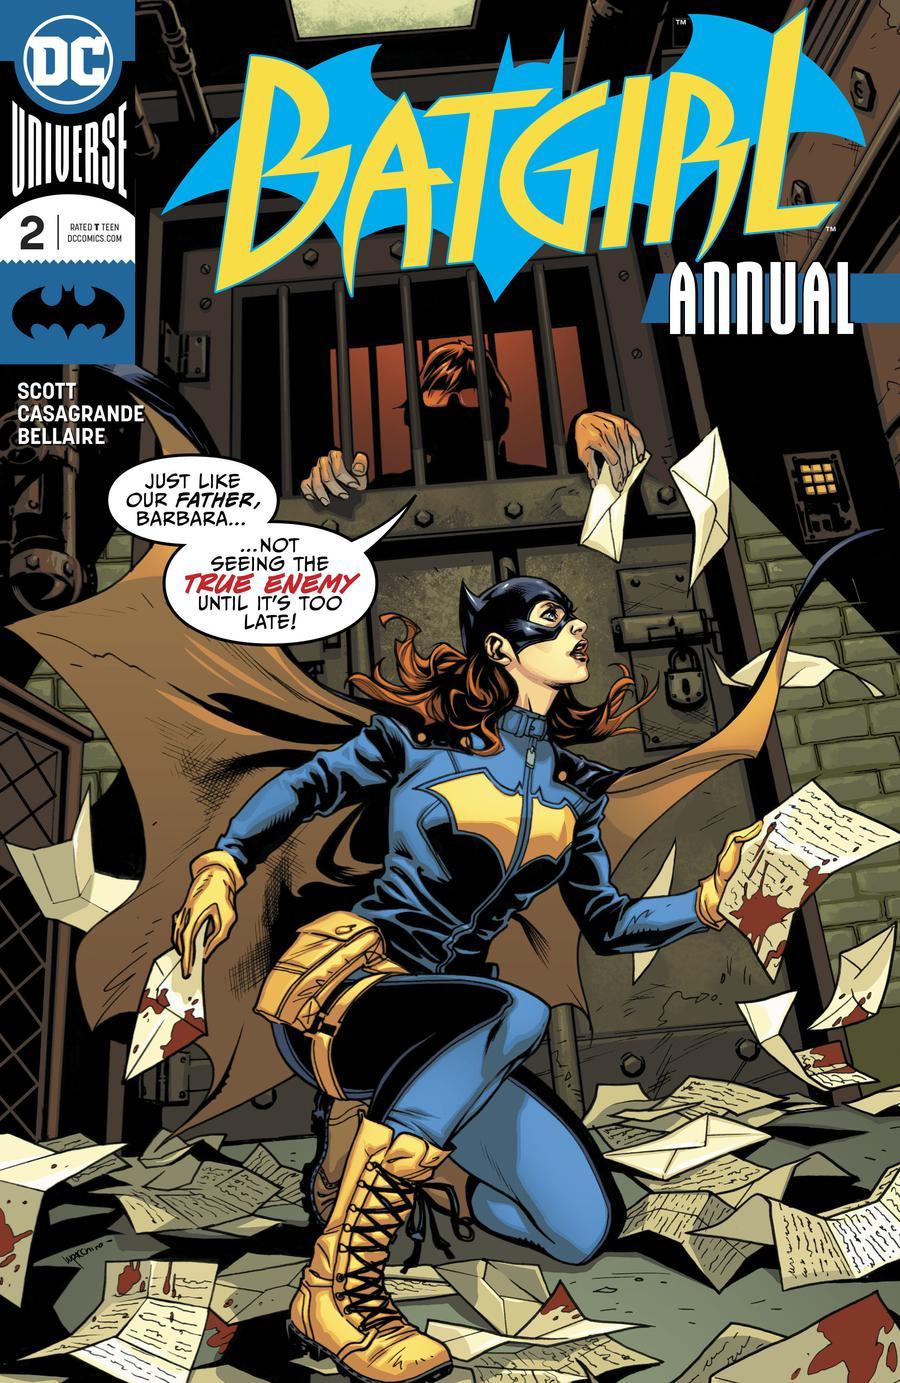 Batgirl Vol. 5 Annual #2